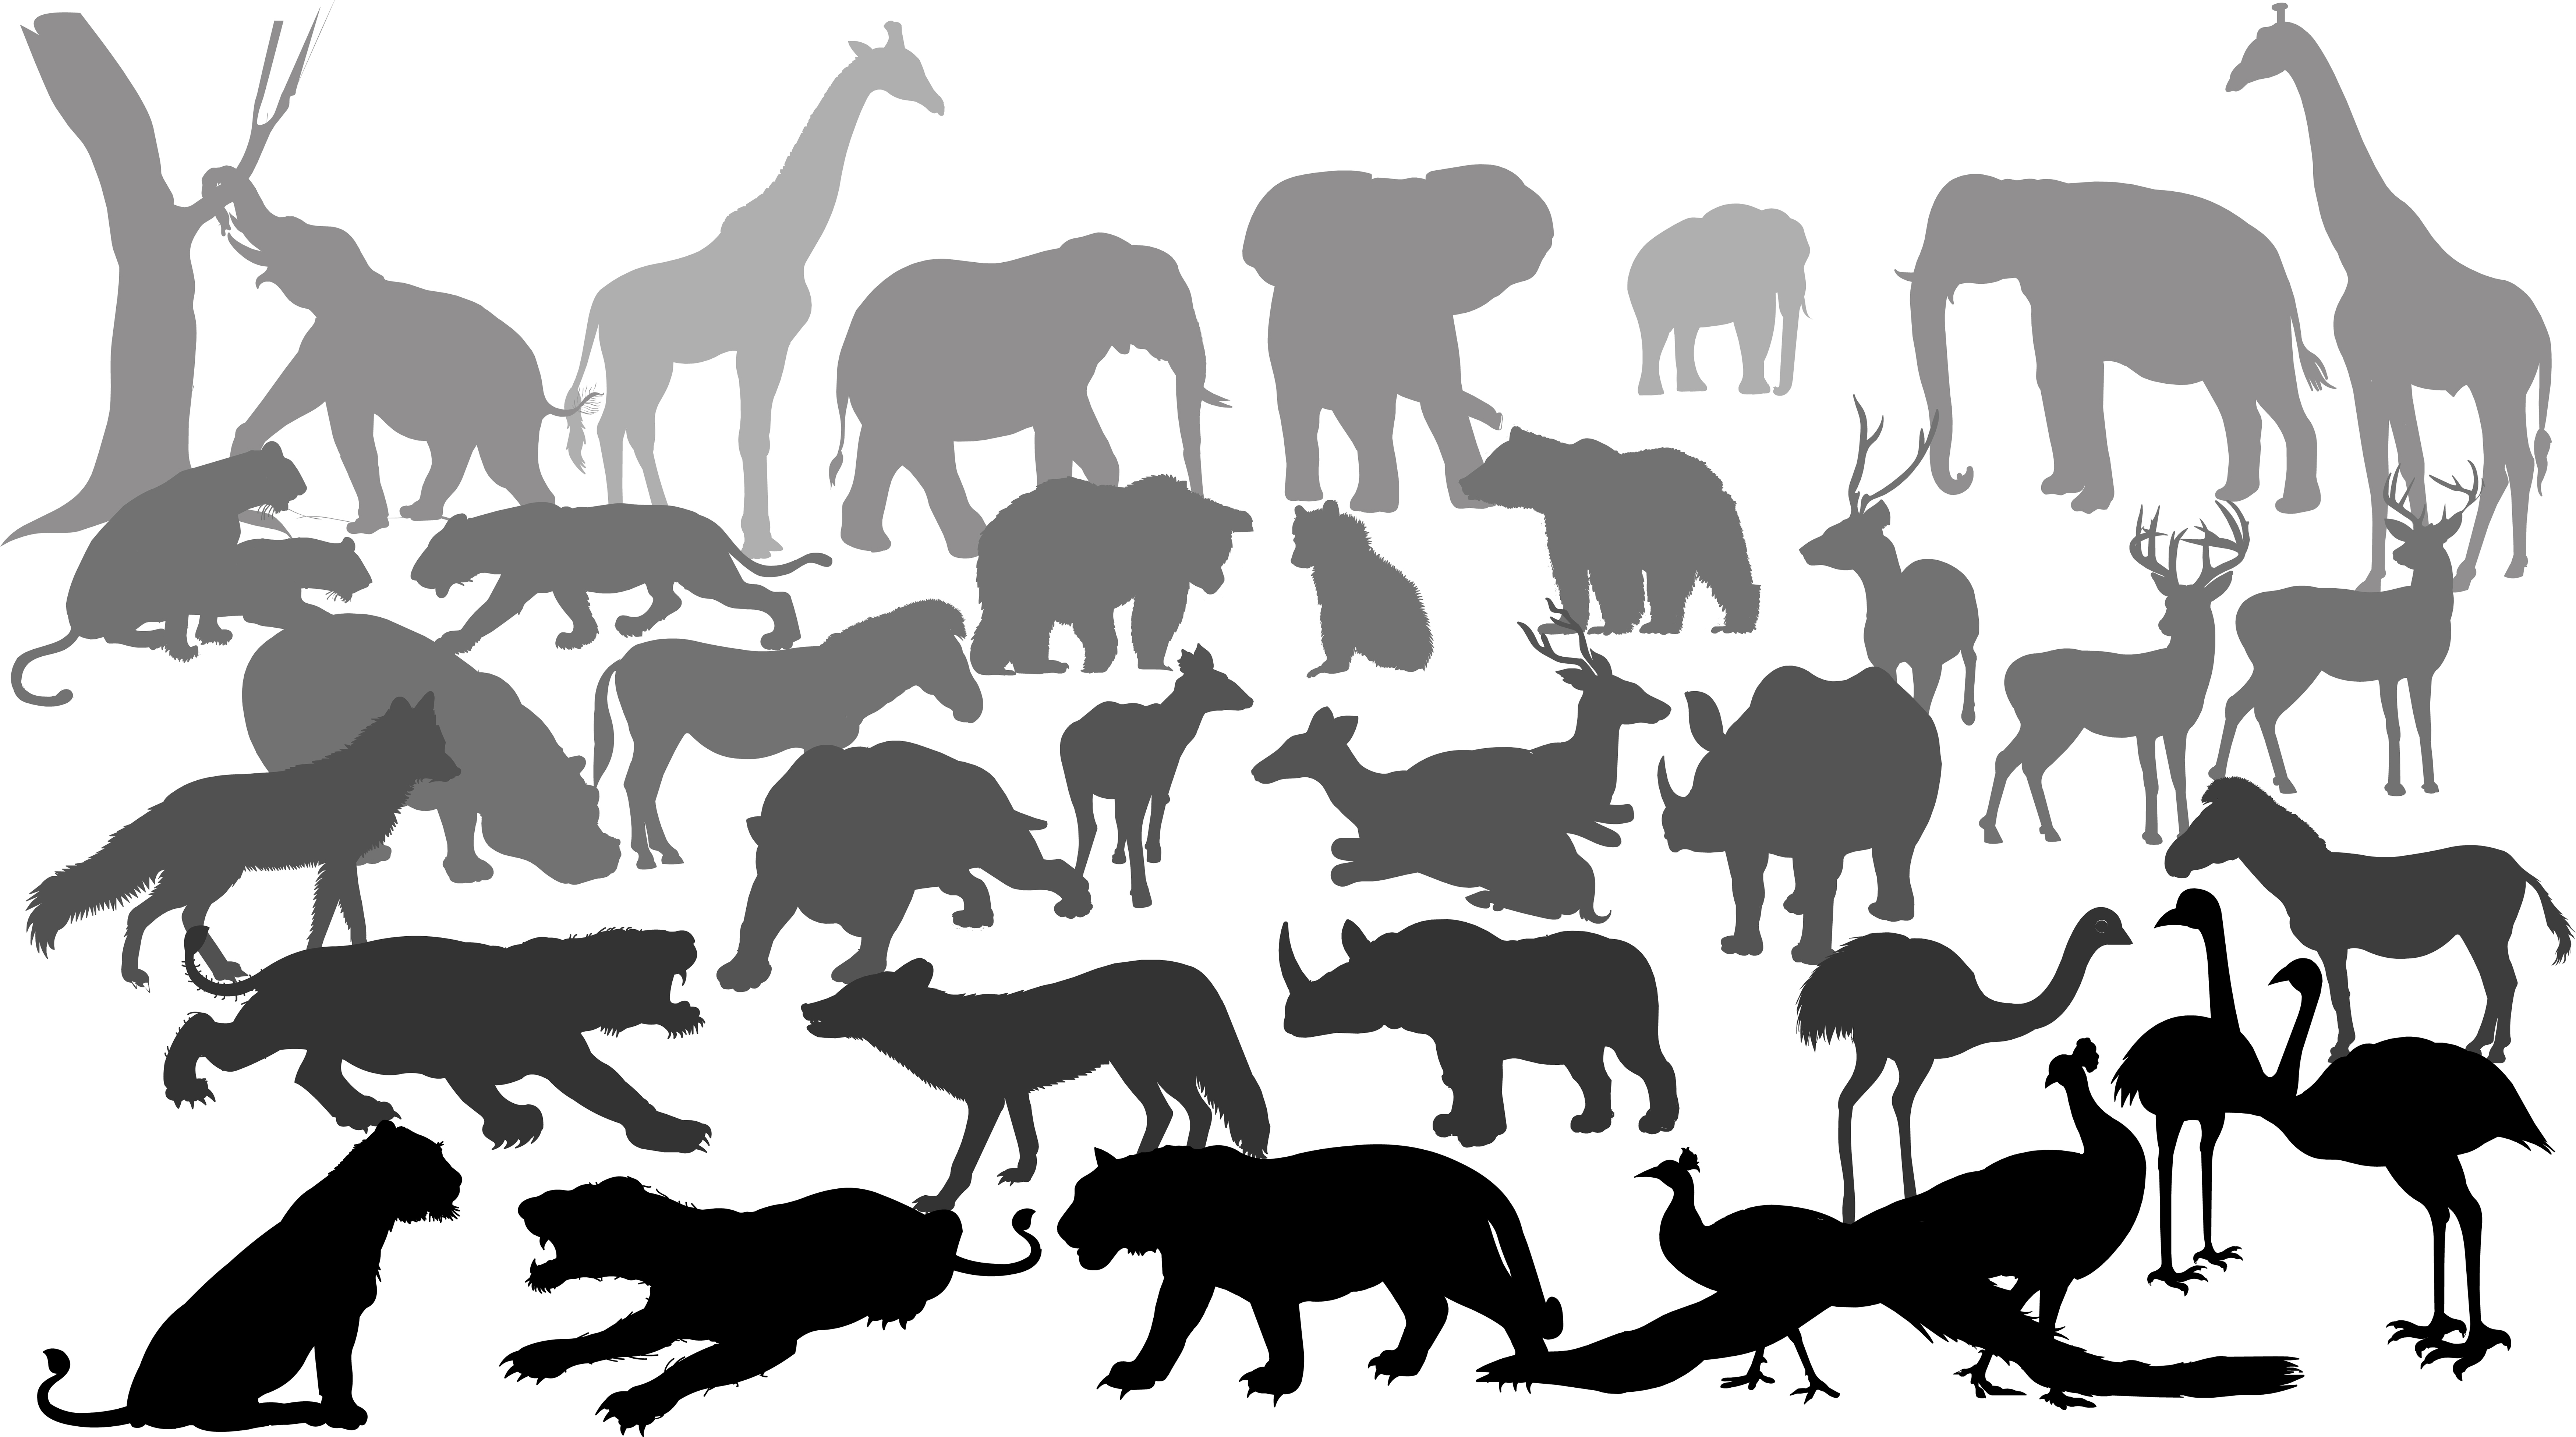 Download wild animals silhouette 533040 - Download Free Vectors, Clipart Graphics & Vector Art